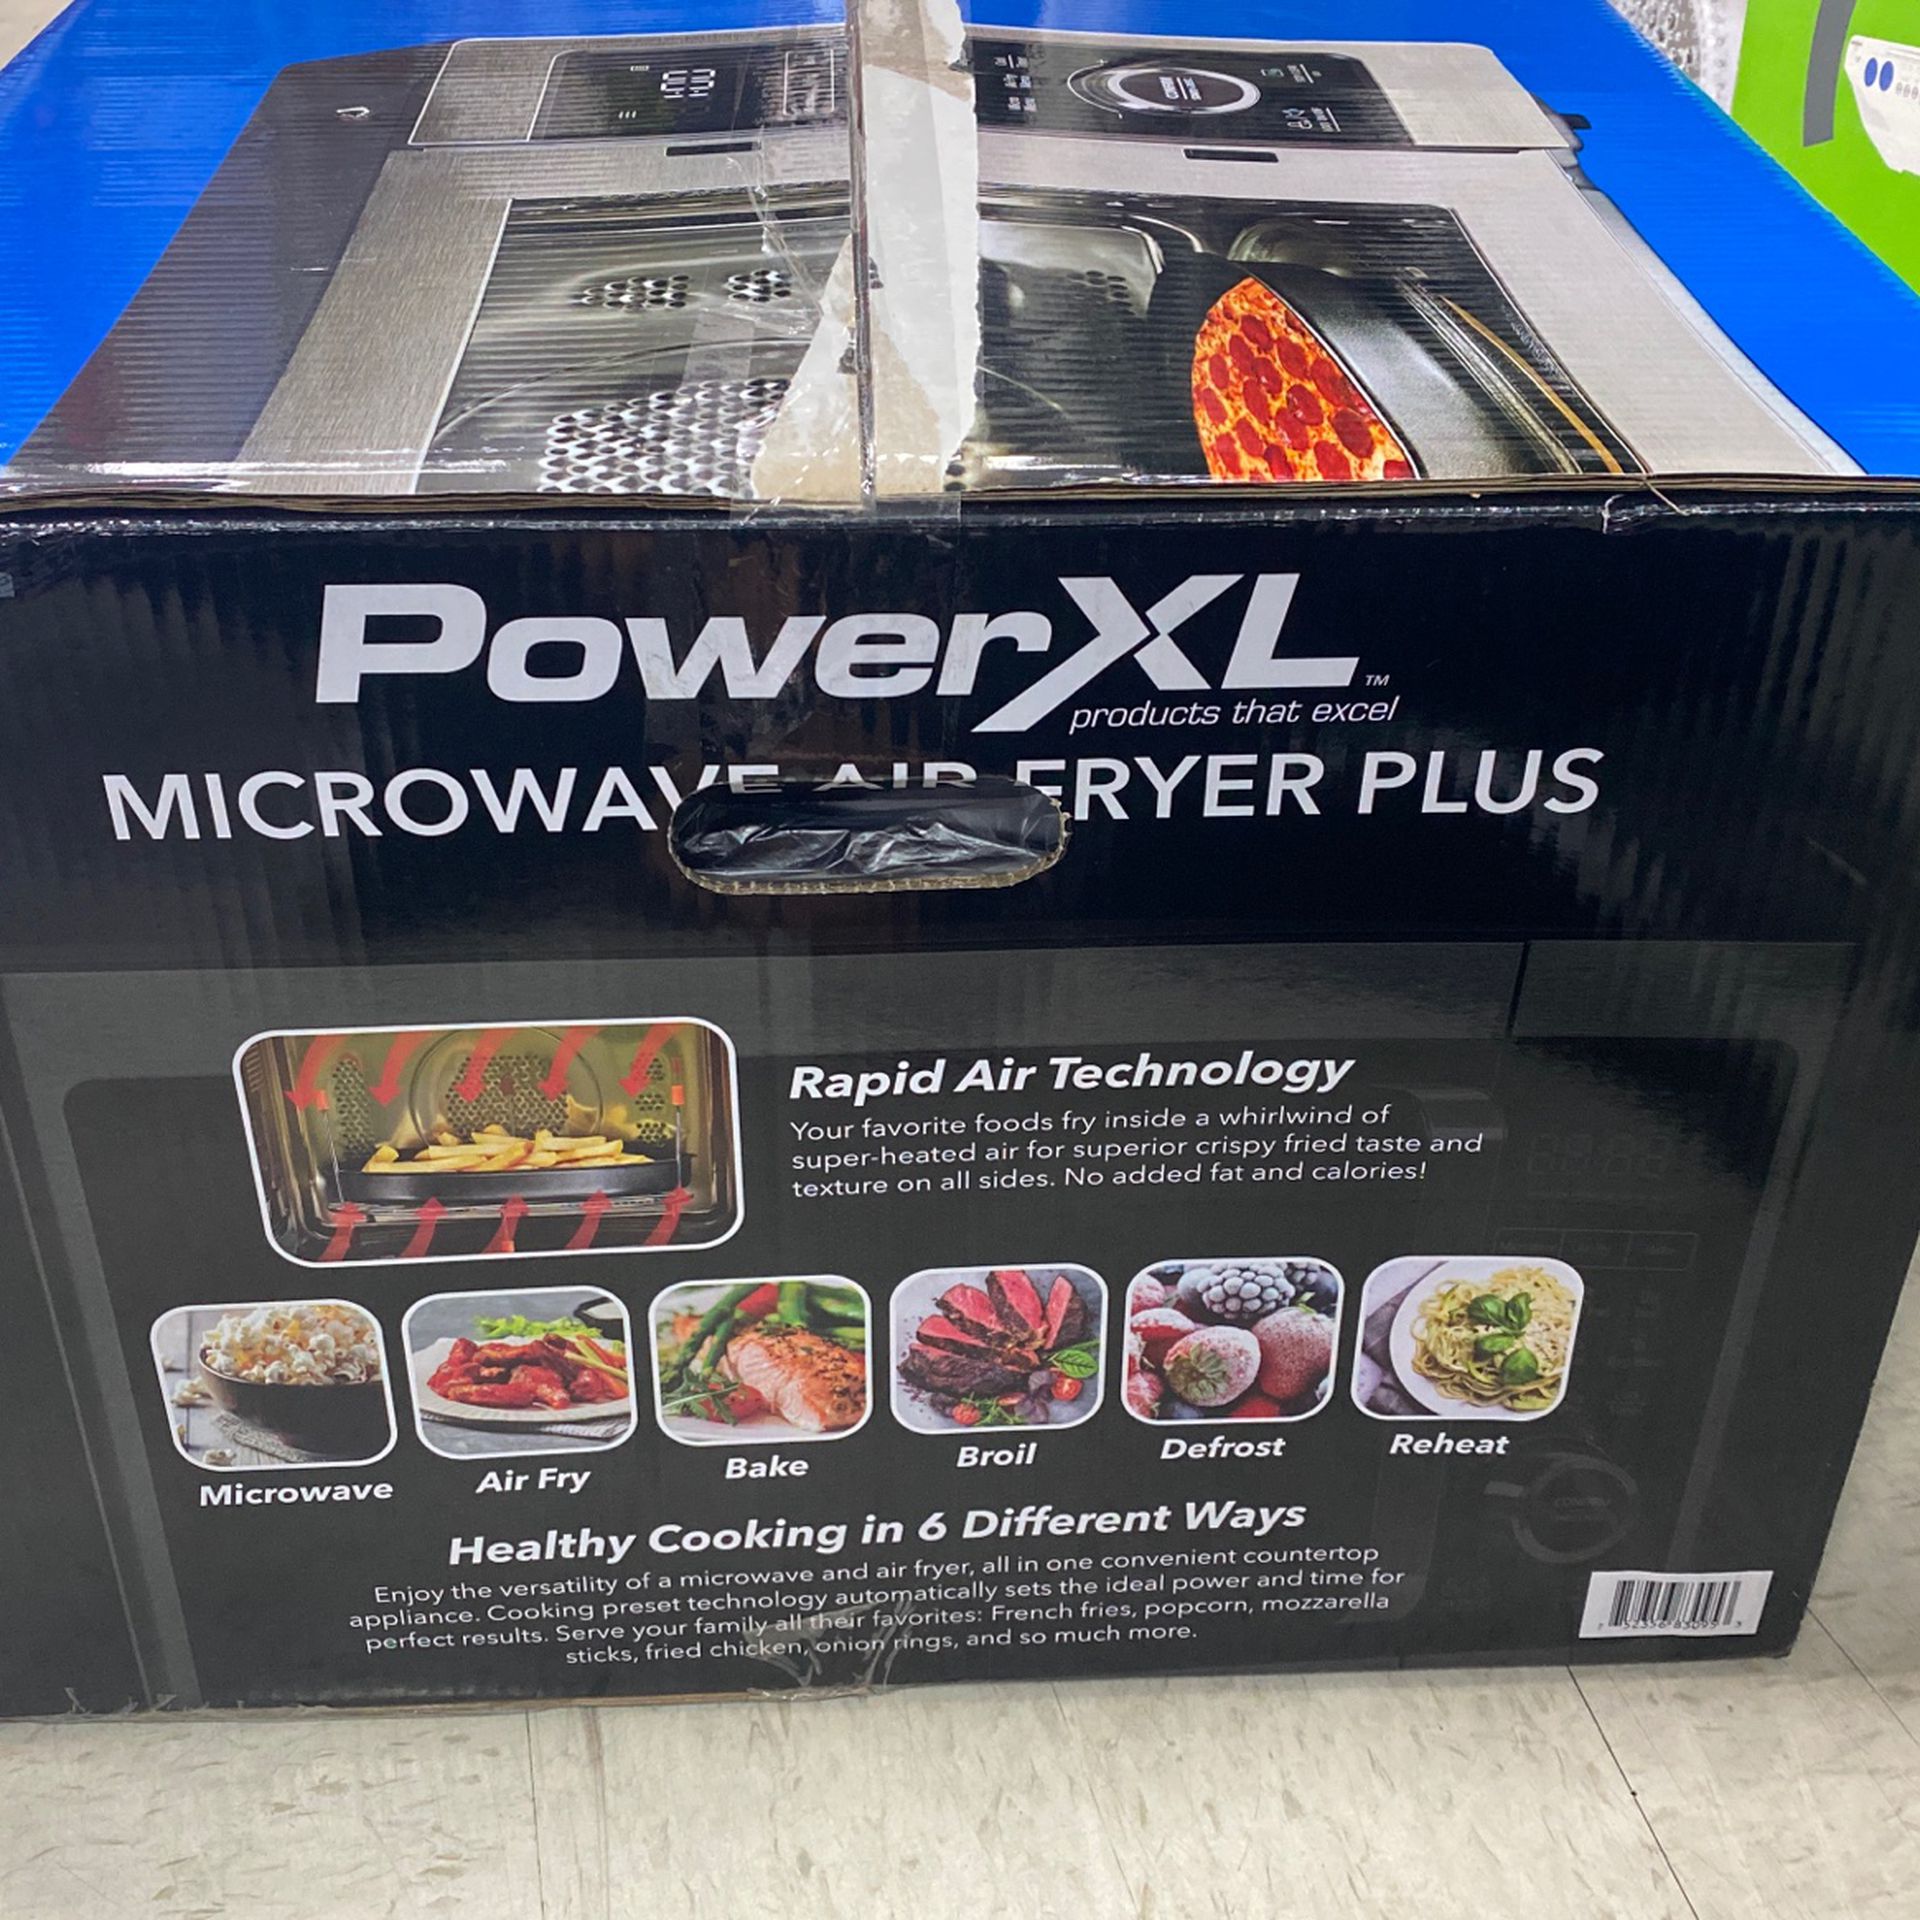 PowerXL 10 qt. Vortex Air Fryer Pro in Slate for Sale in San Antonio, TX -  OfferUp